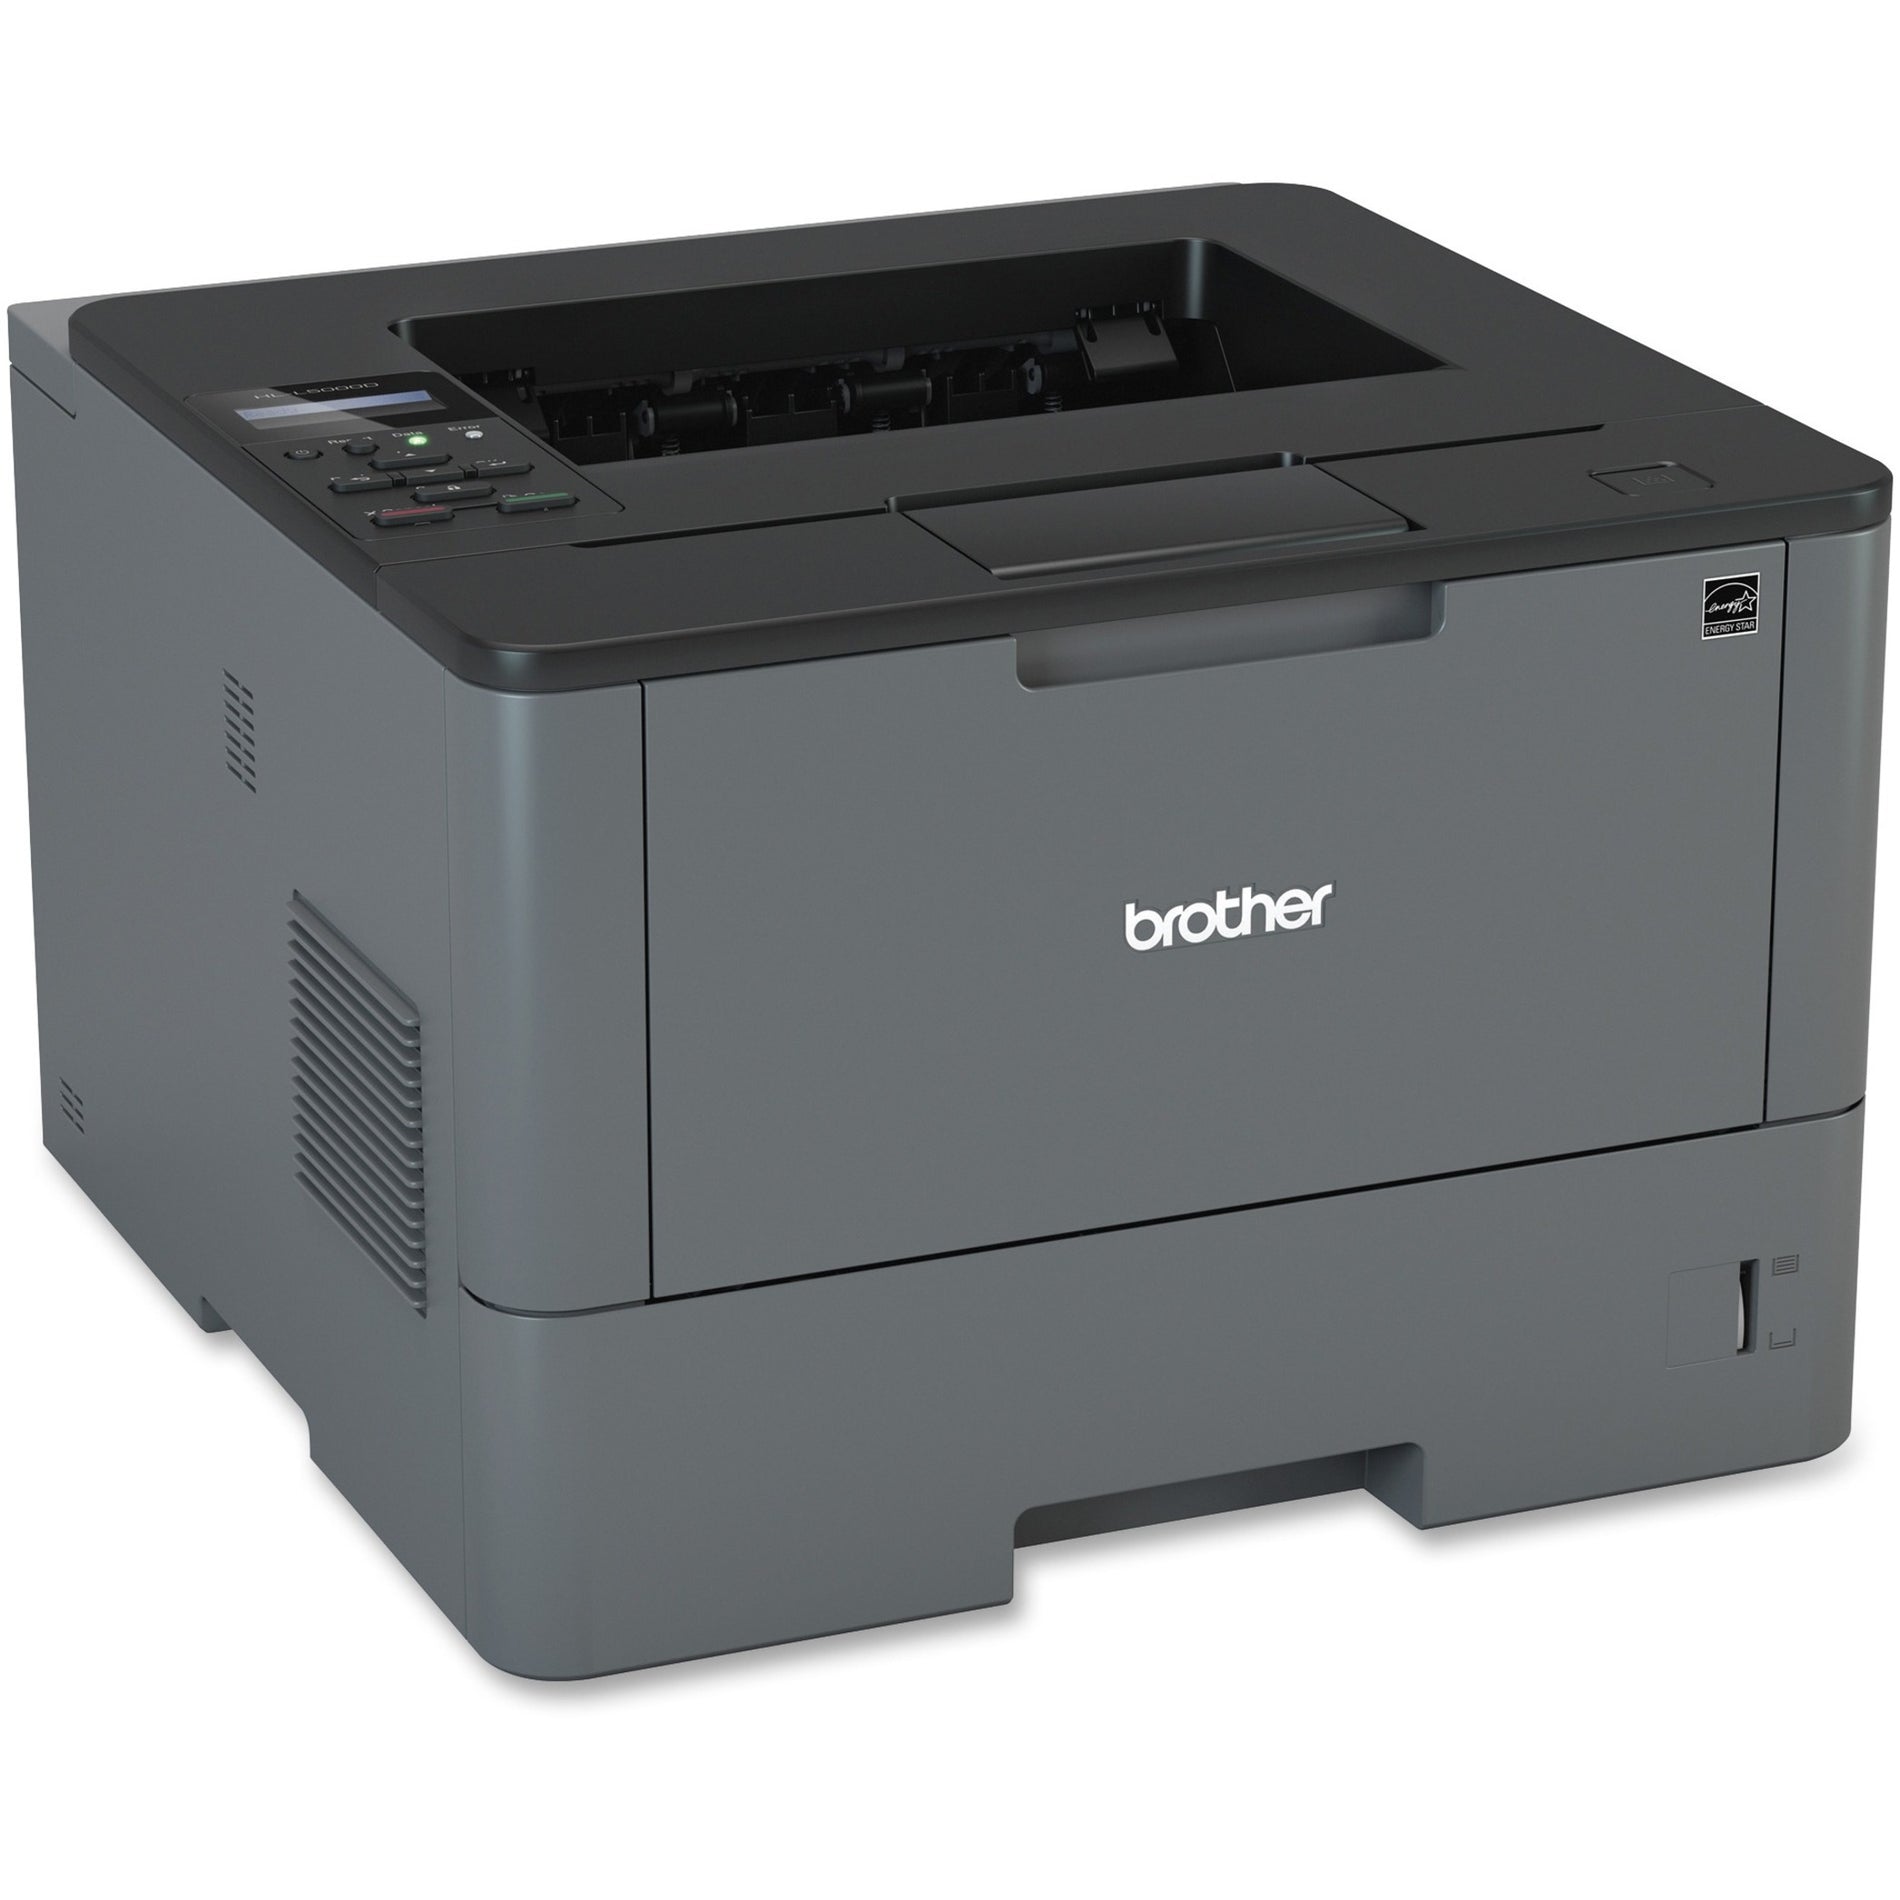 Brother HL-L5000D Business Laser Printer with Duplex, Monochrome, 42 ppm, 1200 x 1200 dpi, USB, Energy Star